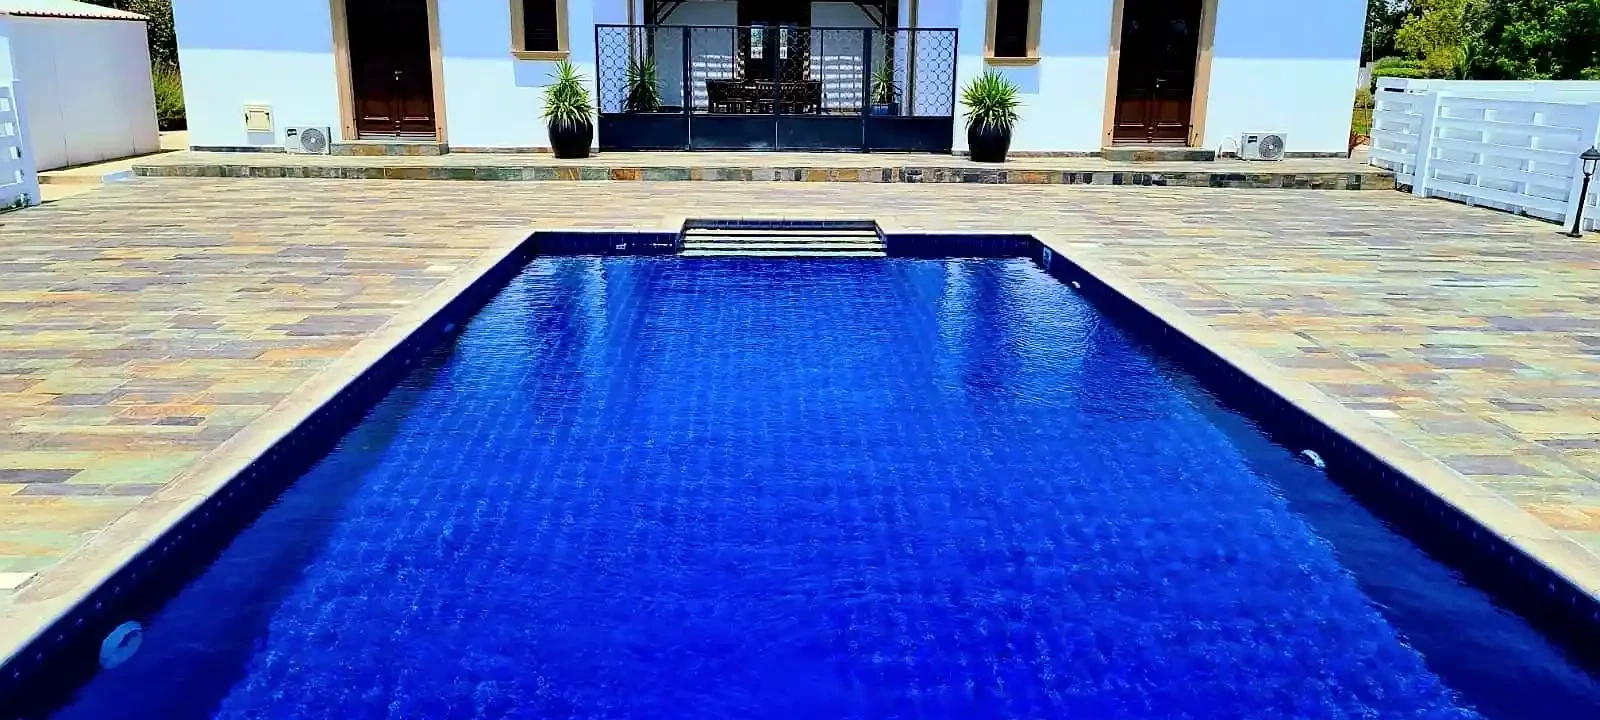 5-bedroom villa fоr sаle €1.250.000, image 1